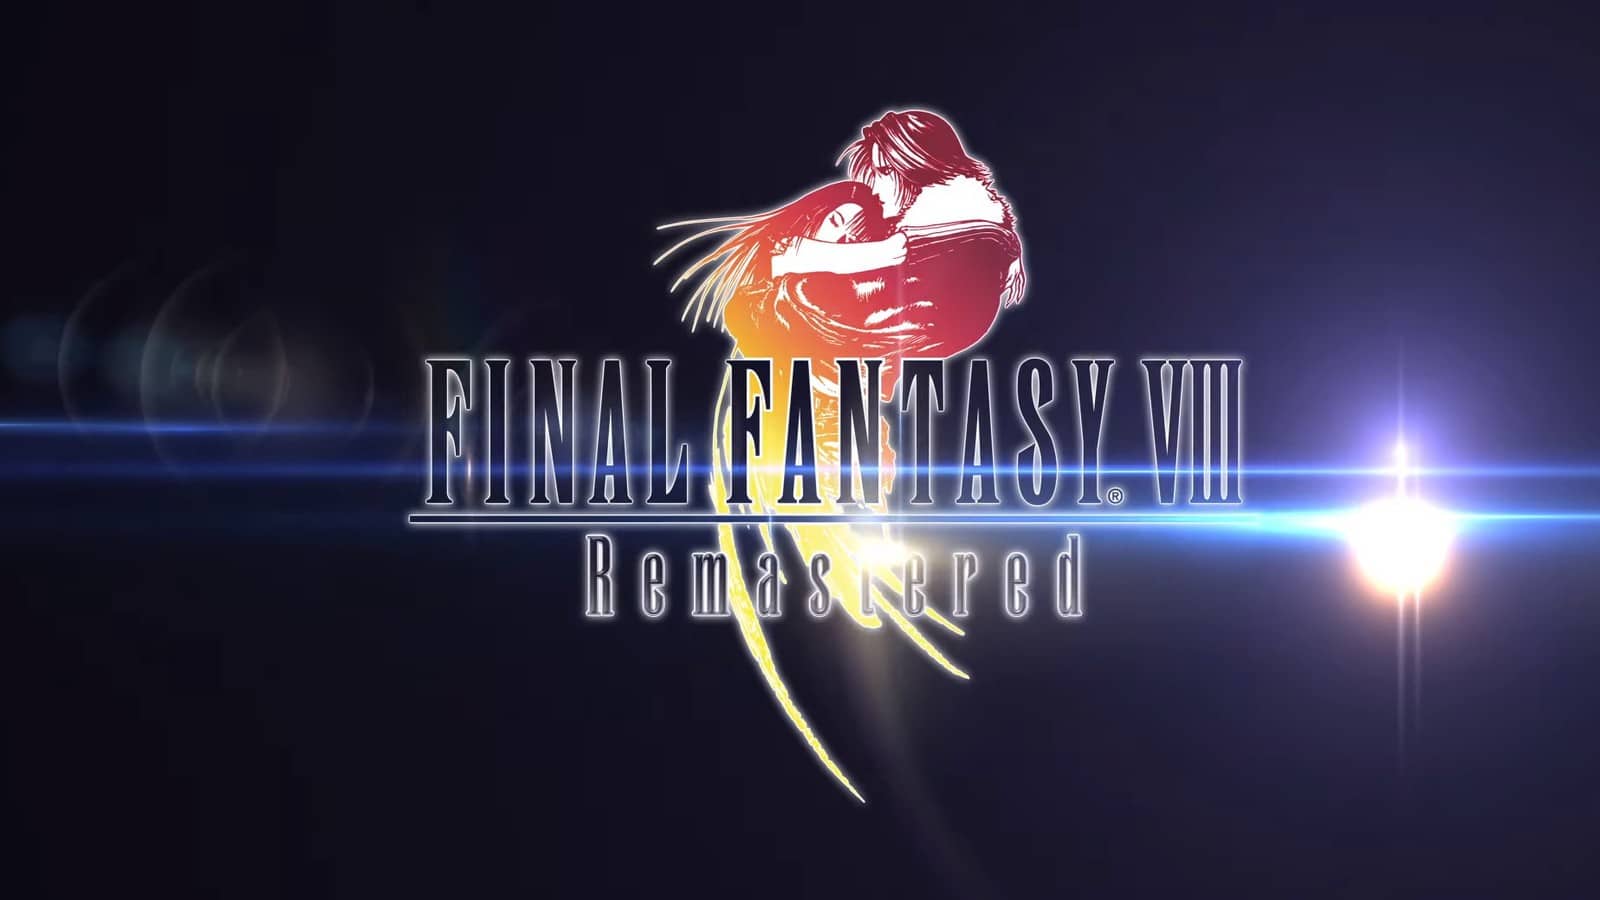 Yoshinori Kitase ofreció detalles interesantes del Remaster de Final Fantasy VIII